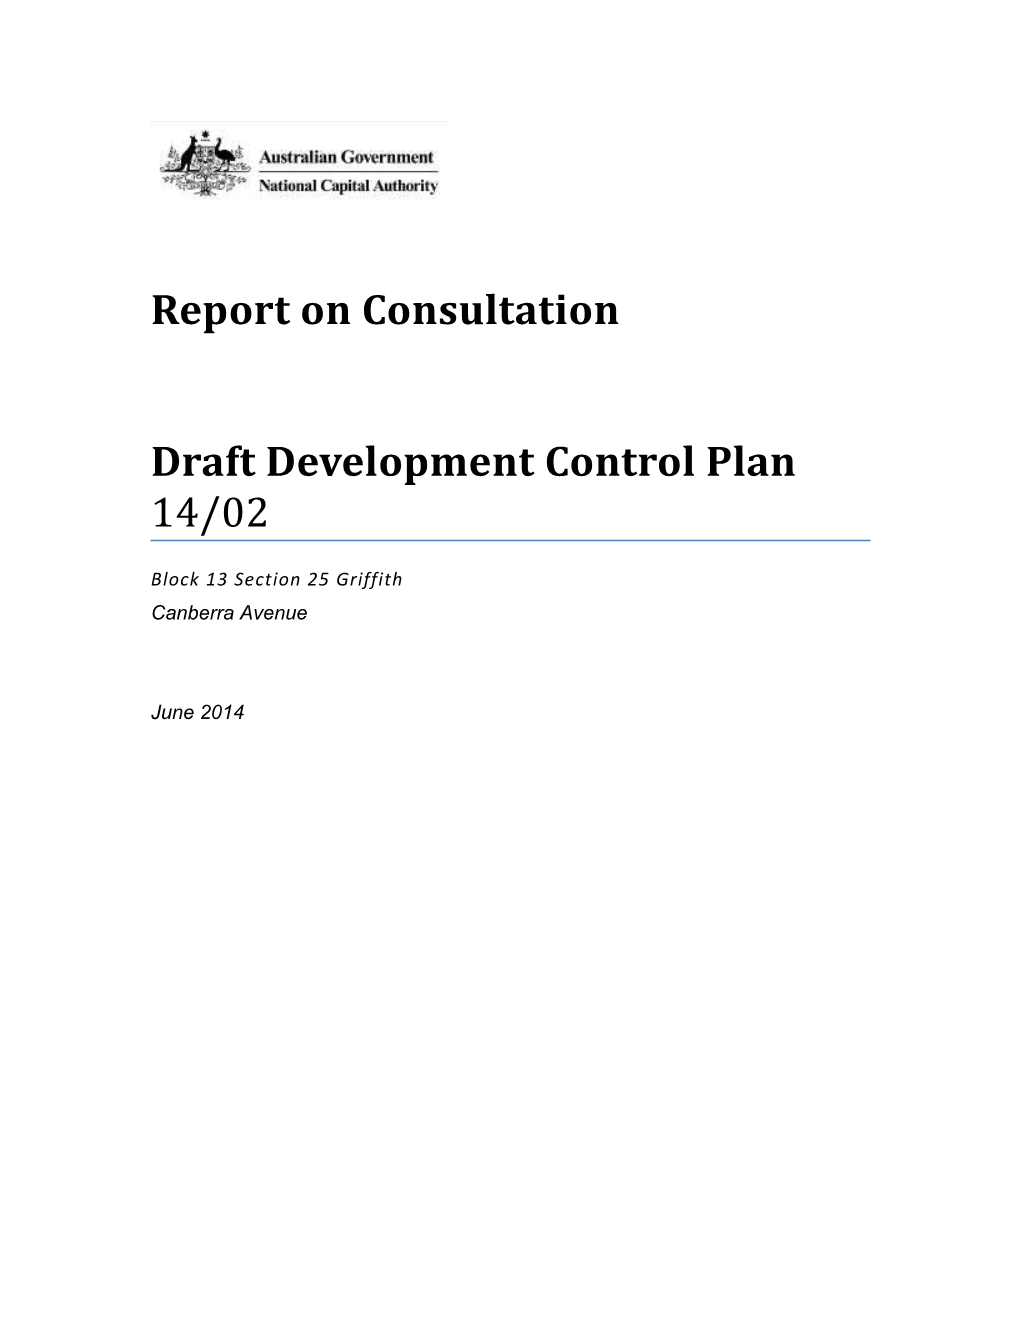 Draft Development Control Plan 14/02